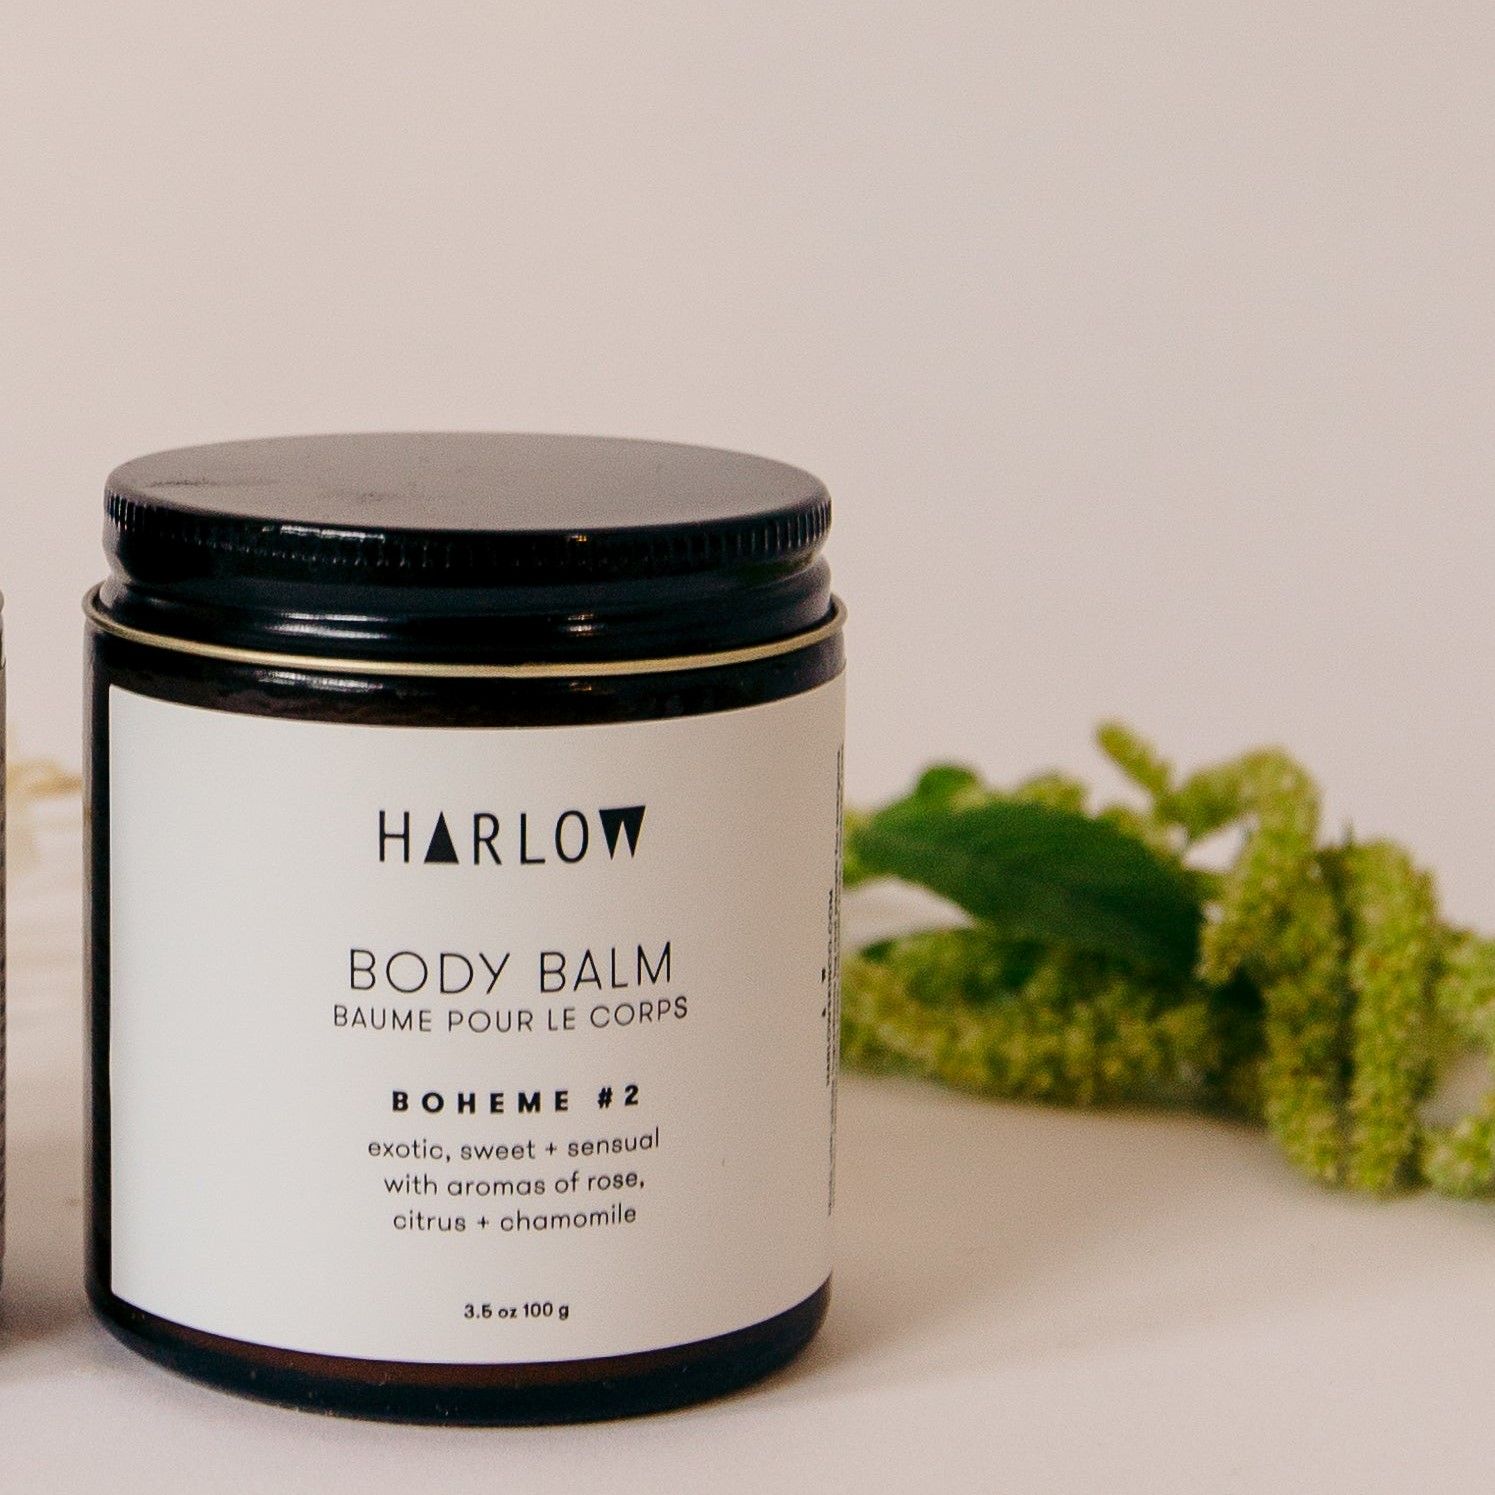 Harlow Skin Body Balm - Boheme #2